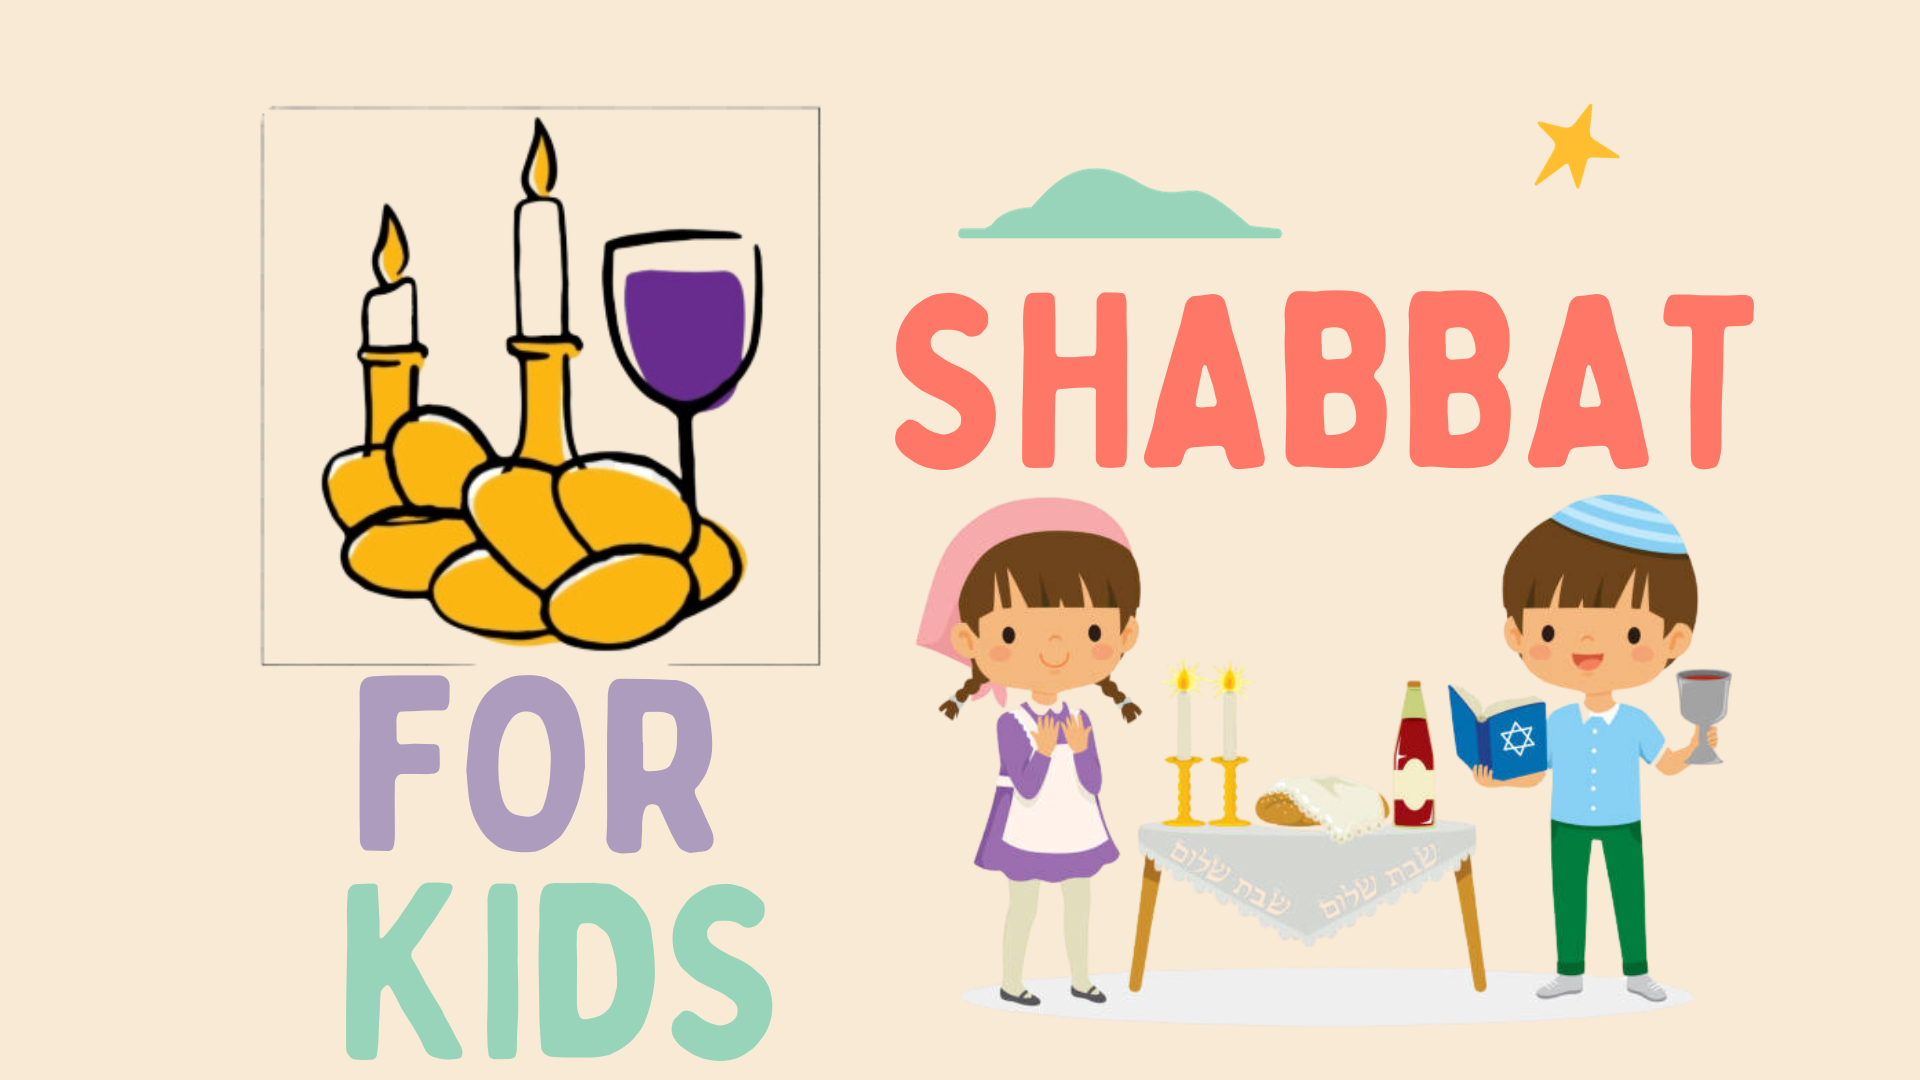 shabbat for kids (1920 x 1080 px).png